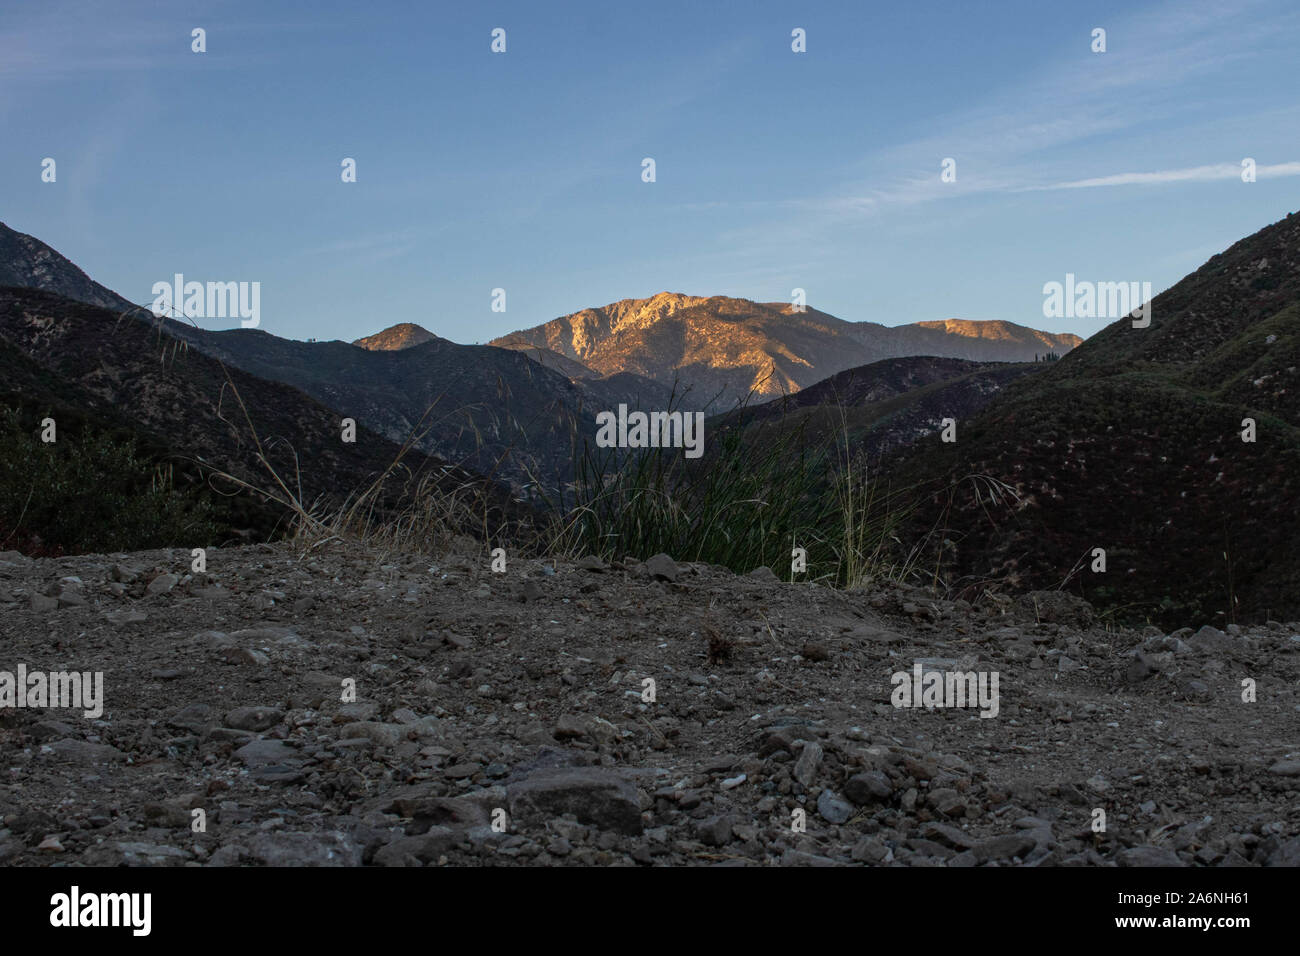 Mount Baldy landscape Stock Photo